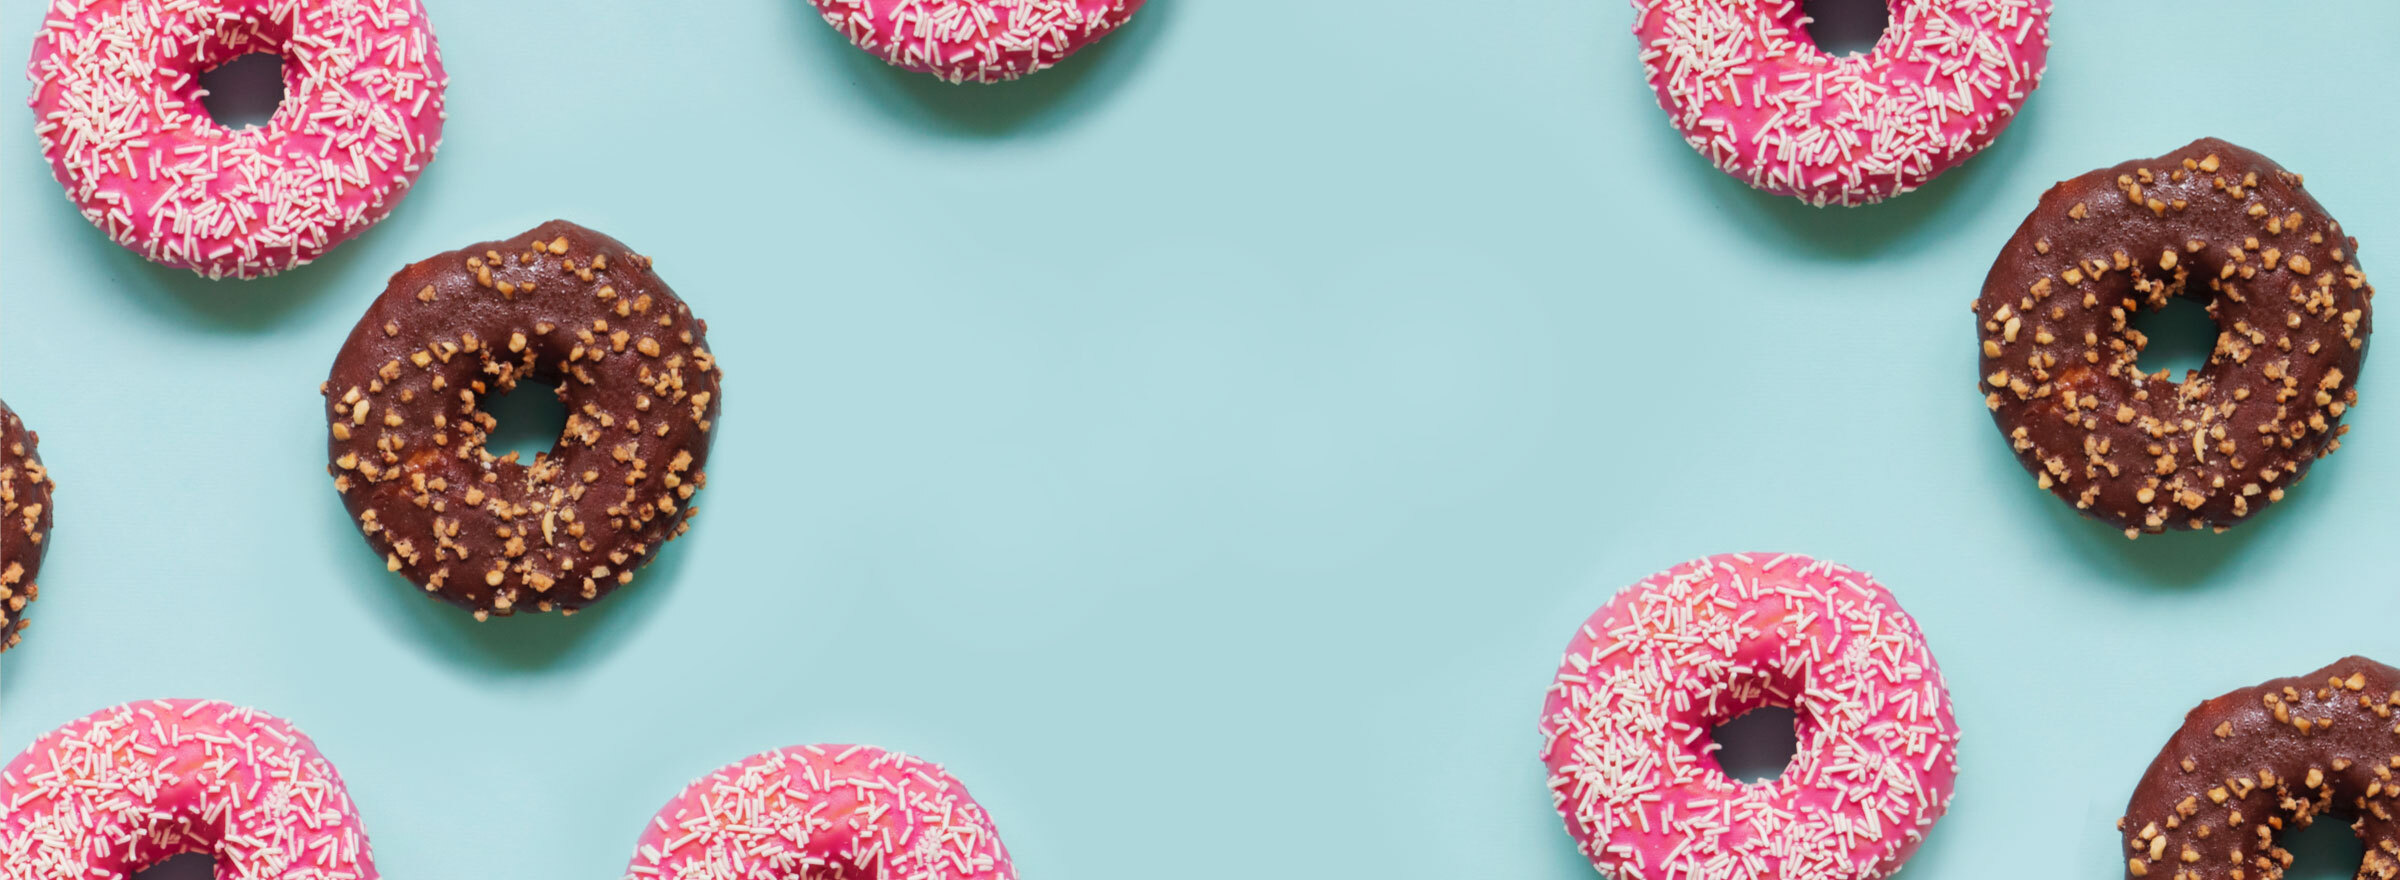 Glazed donuts on a blue background.